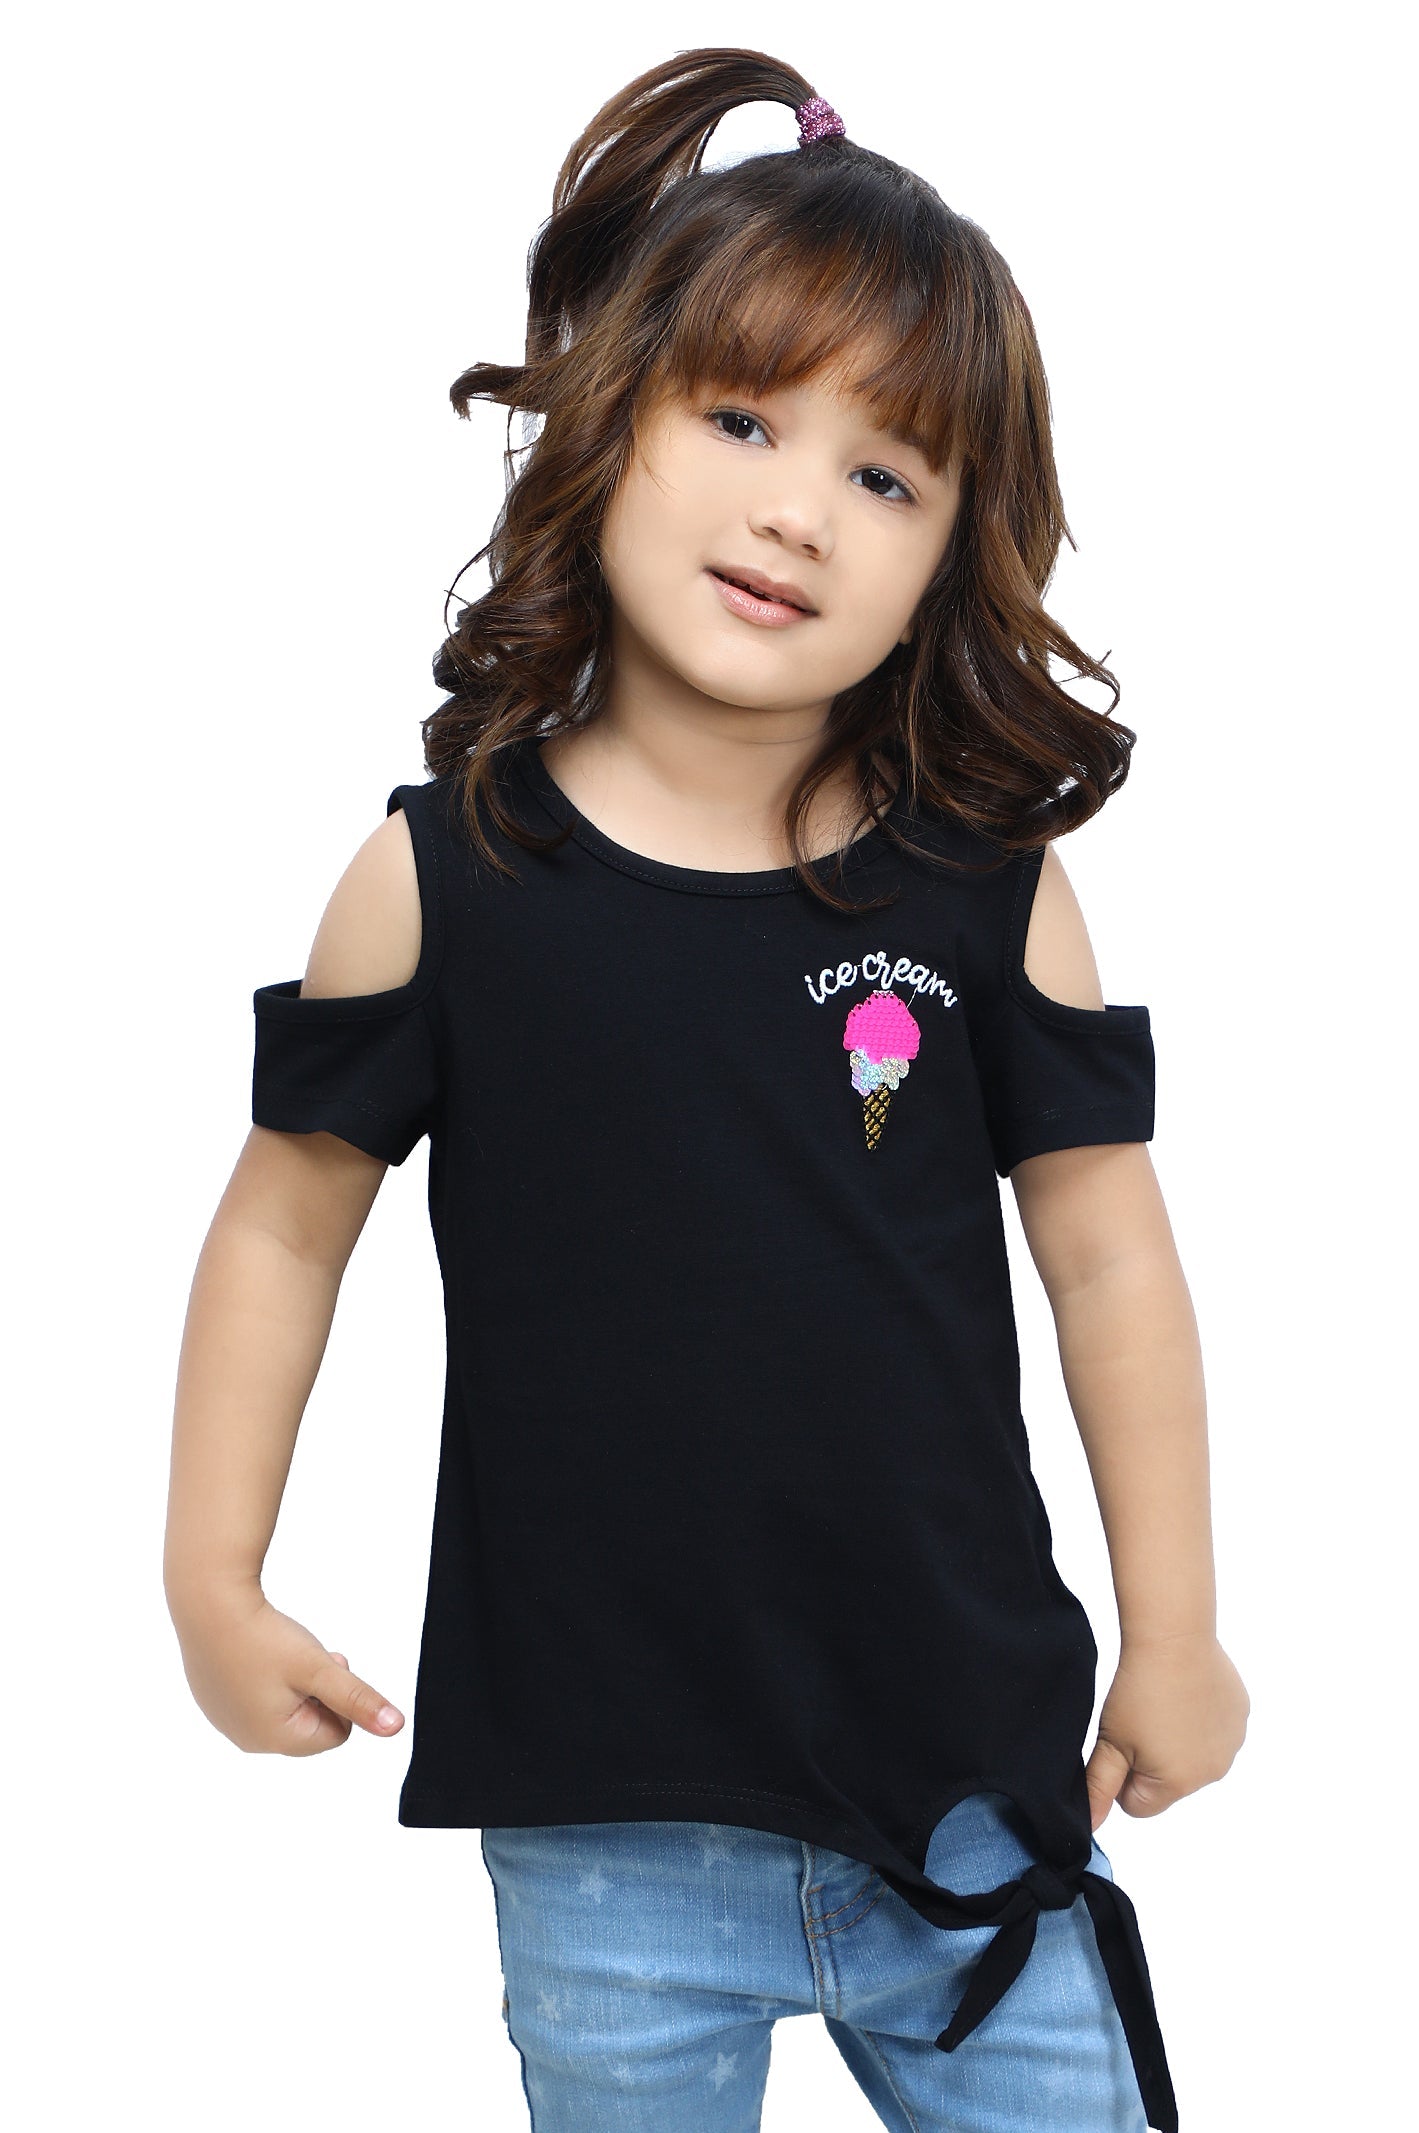 Girls T-Shirt In Black SKU: KGA-0269-BLACK - Diners